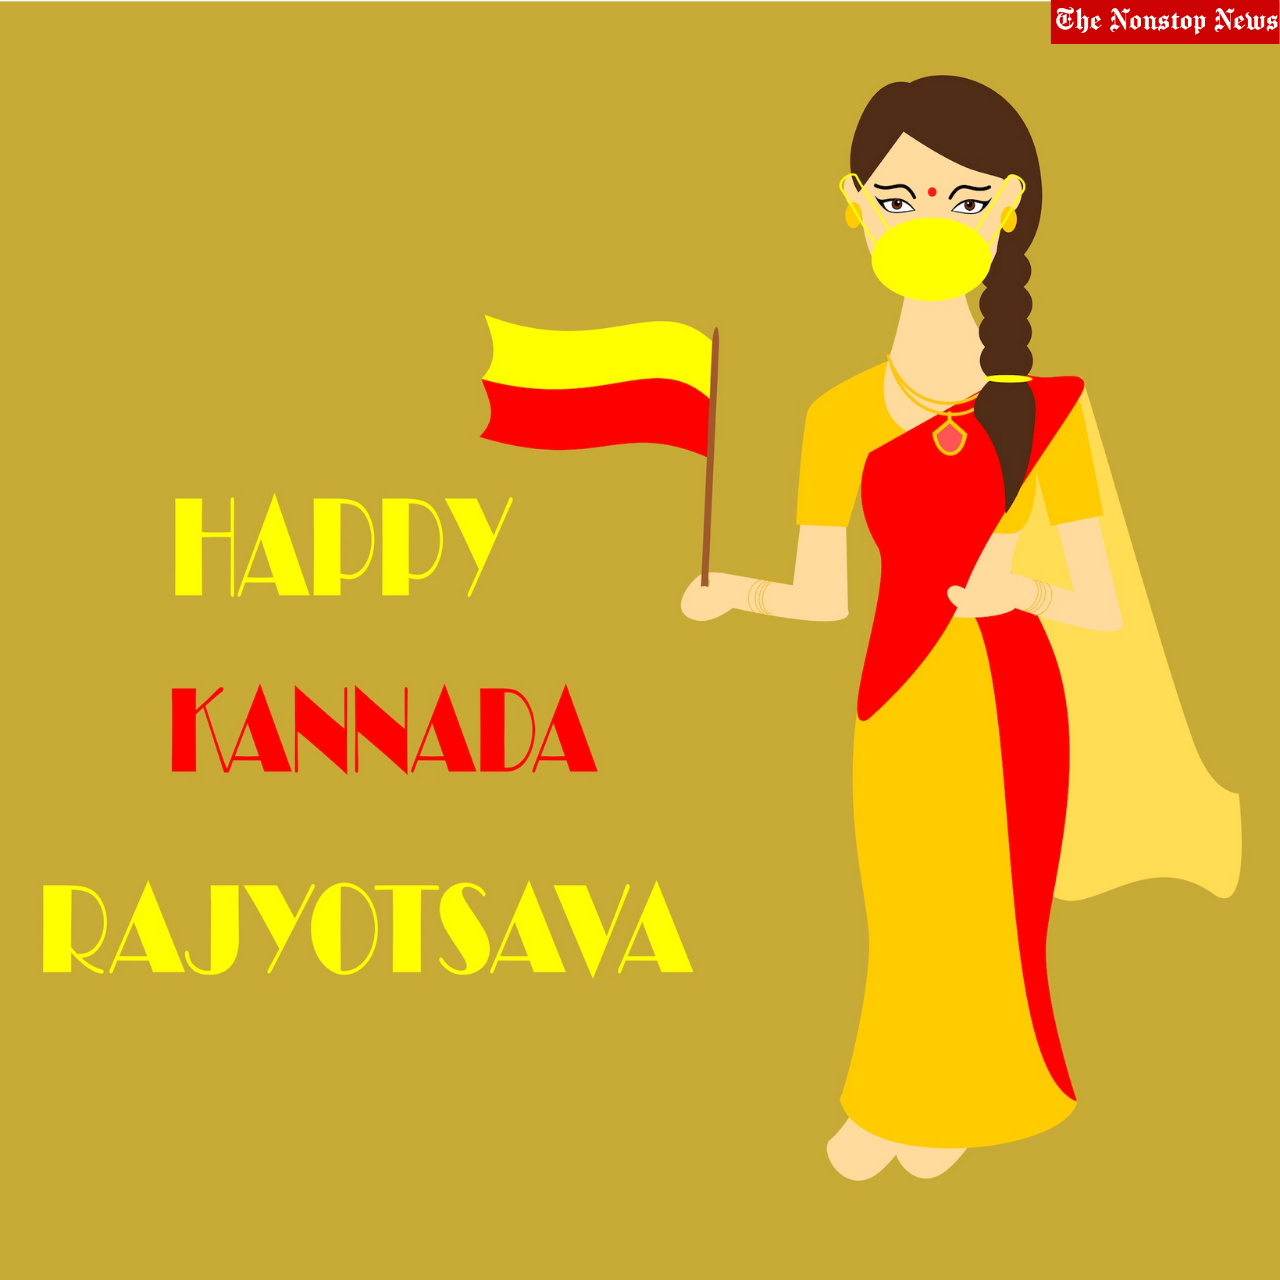 Karnataka Rajyotsava 2021 Wishes, Greetings, HD Images, Quotes, and WhatsApp Status Video to Download